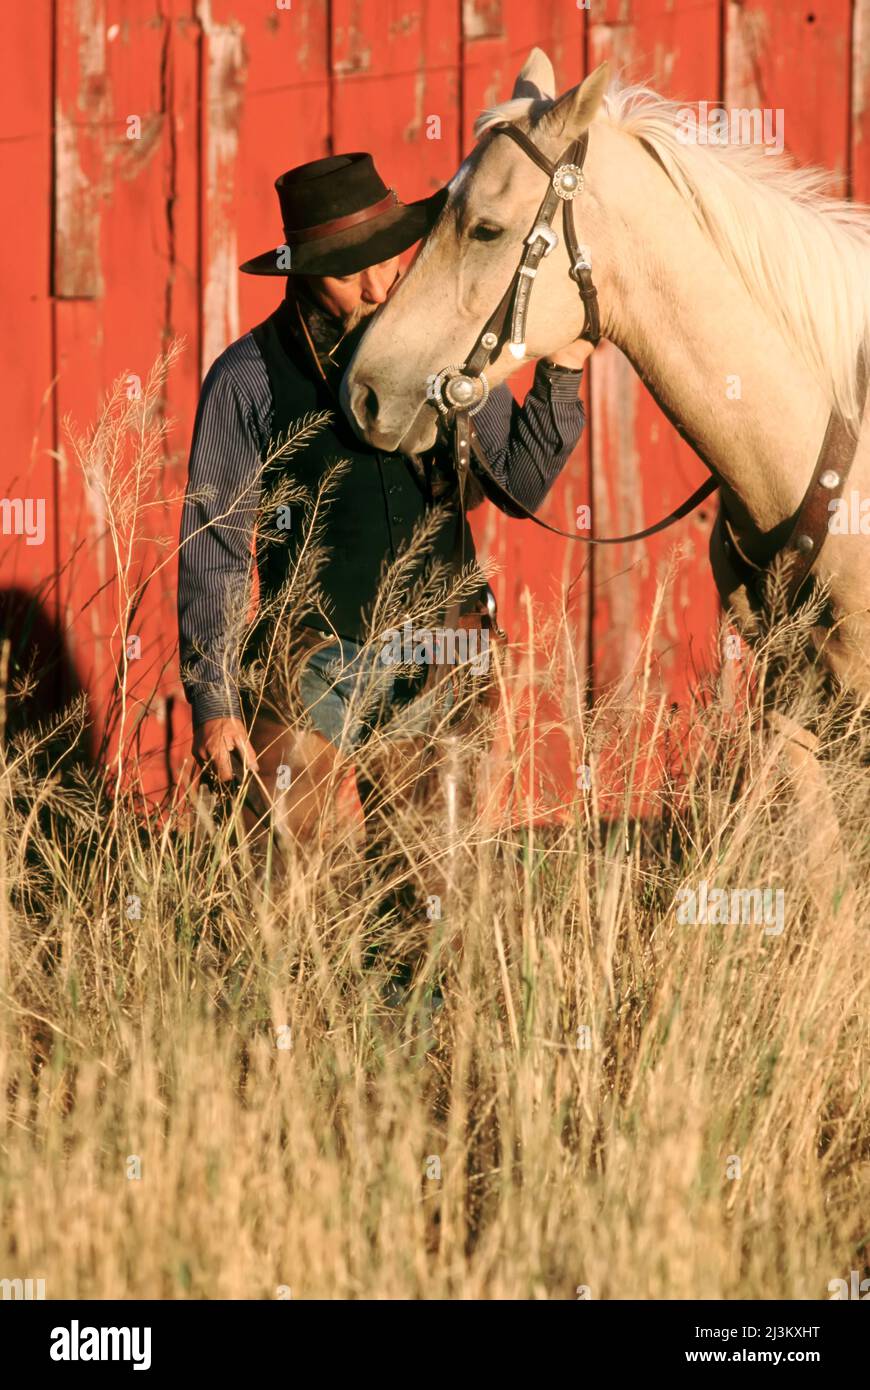 Cowboy waiting with horse, showing tenderness; Seneca, Oregon, United States of America Stock Photo